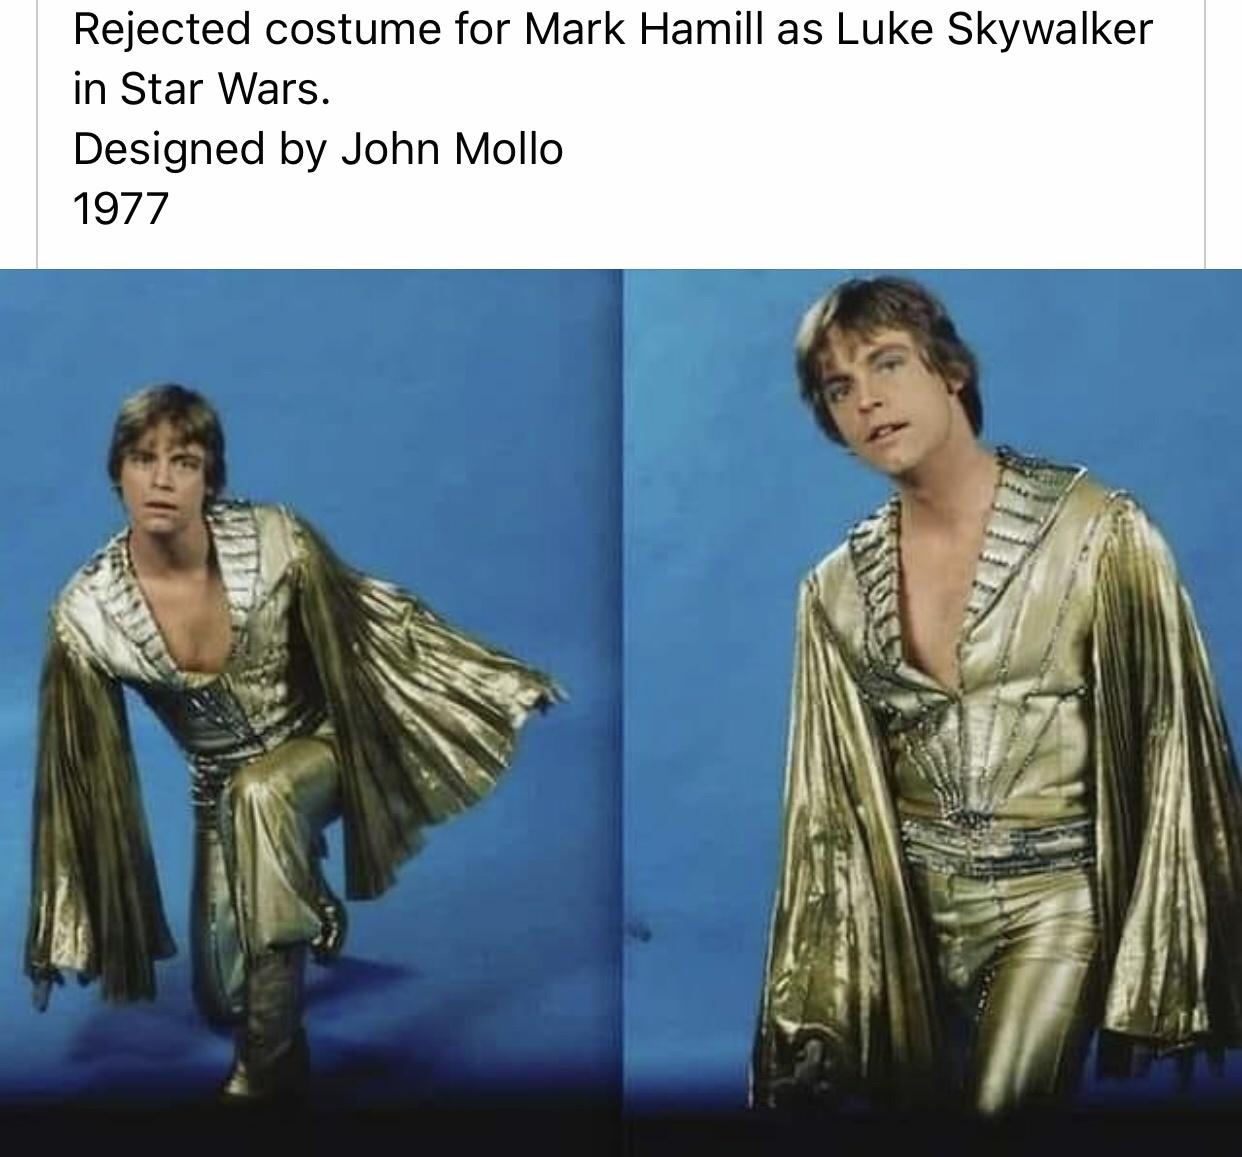 costume design - Rejected costume for Mark Hamill as Luke Skywalker in Star Wars. Designed by John Mollo 1977